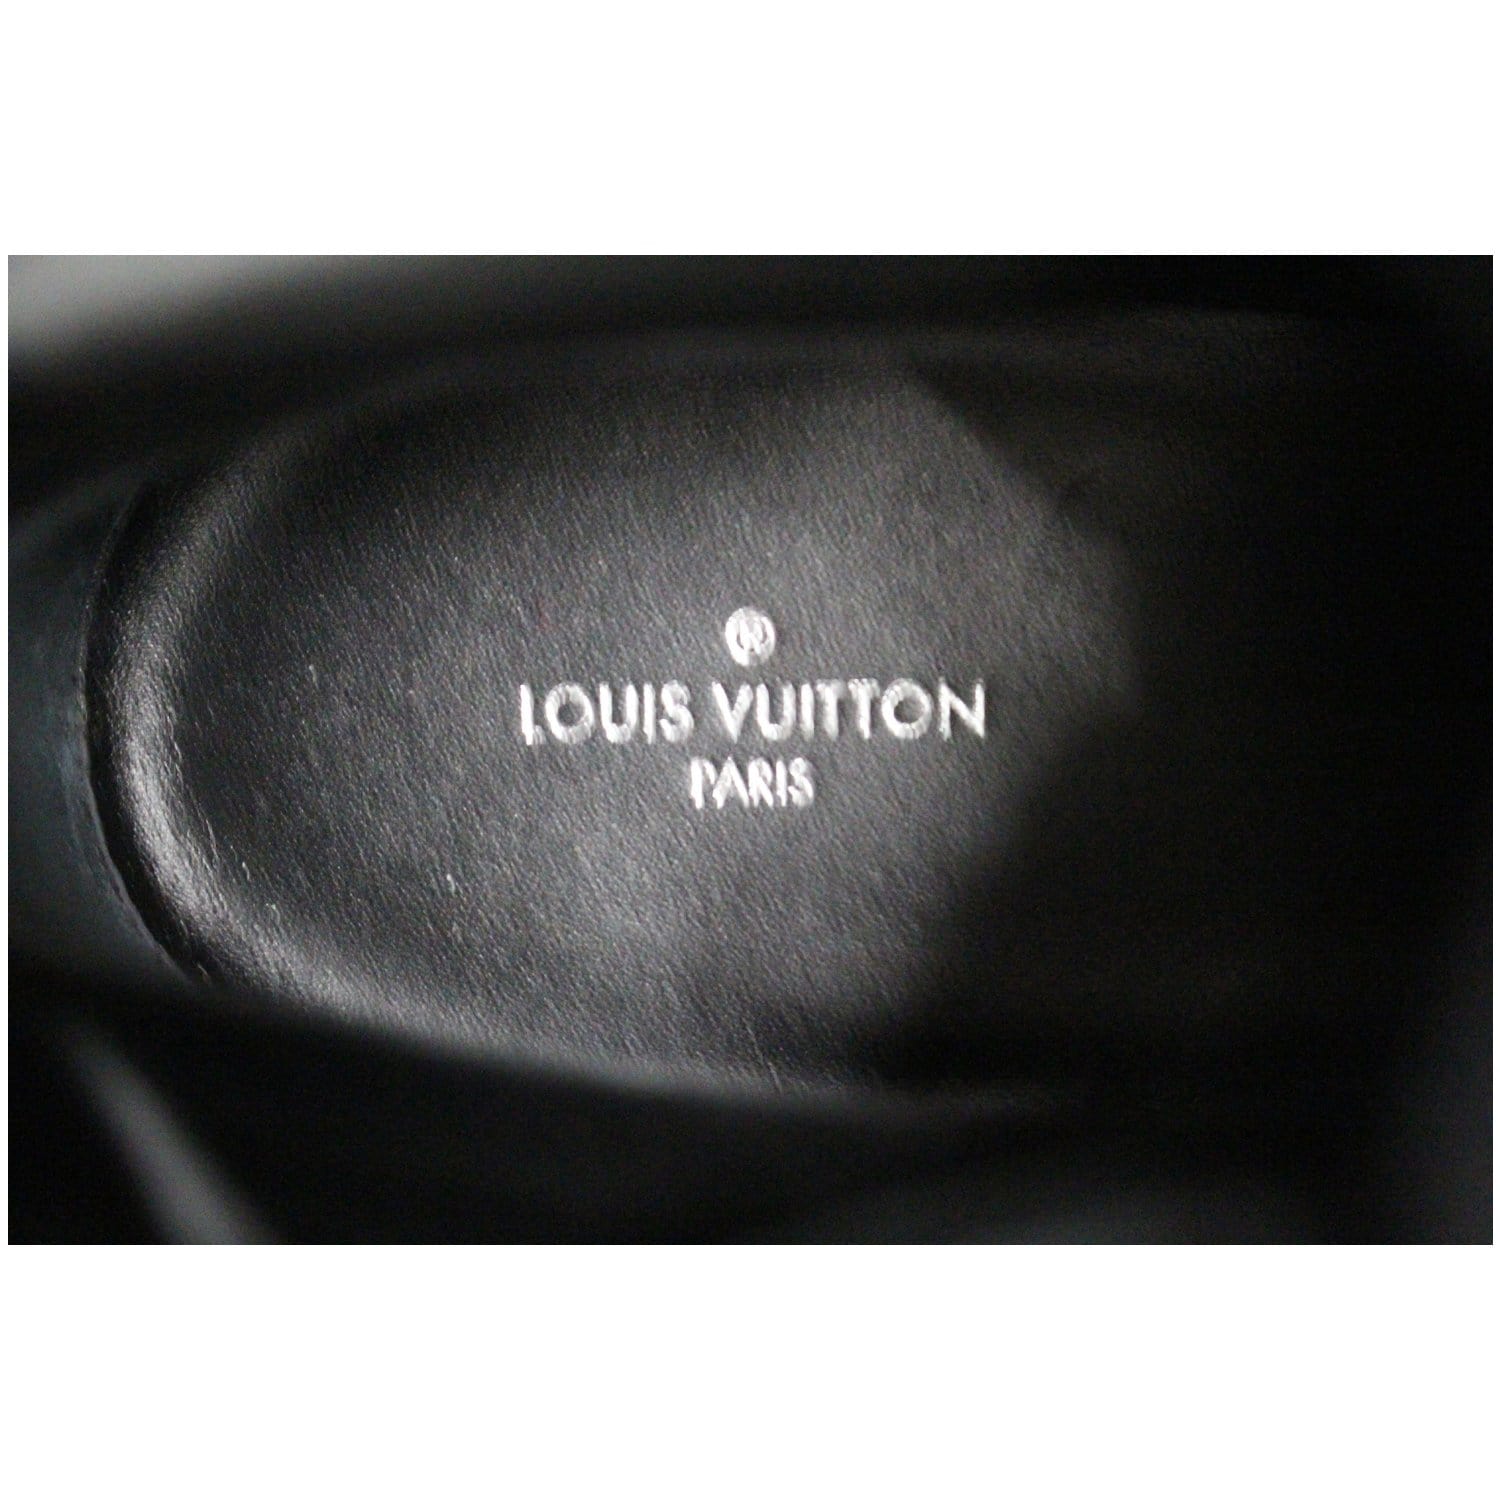 Lot 748: 3 Louis Vuitton Items, incl. Metropolis Flat Ranger Boots